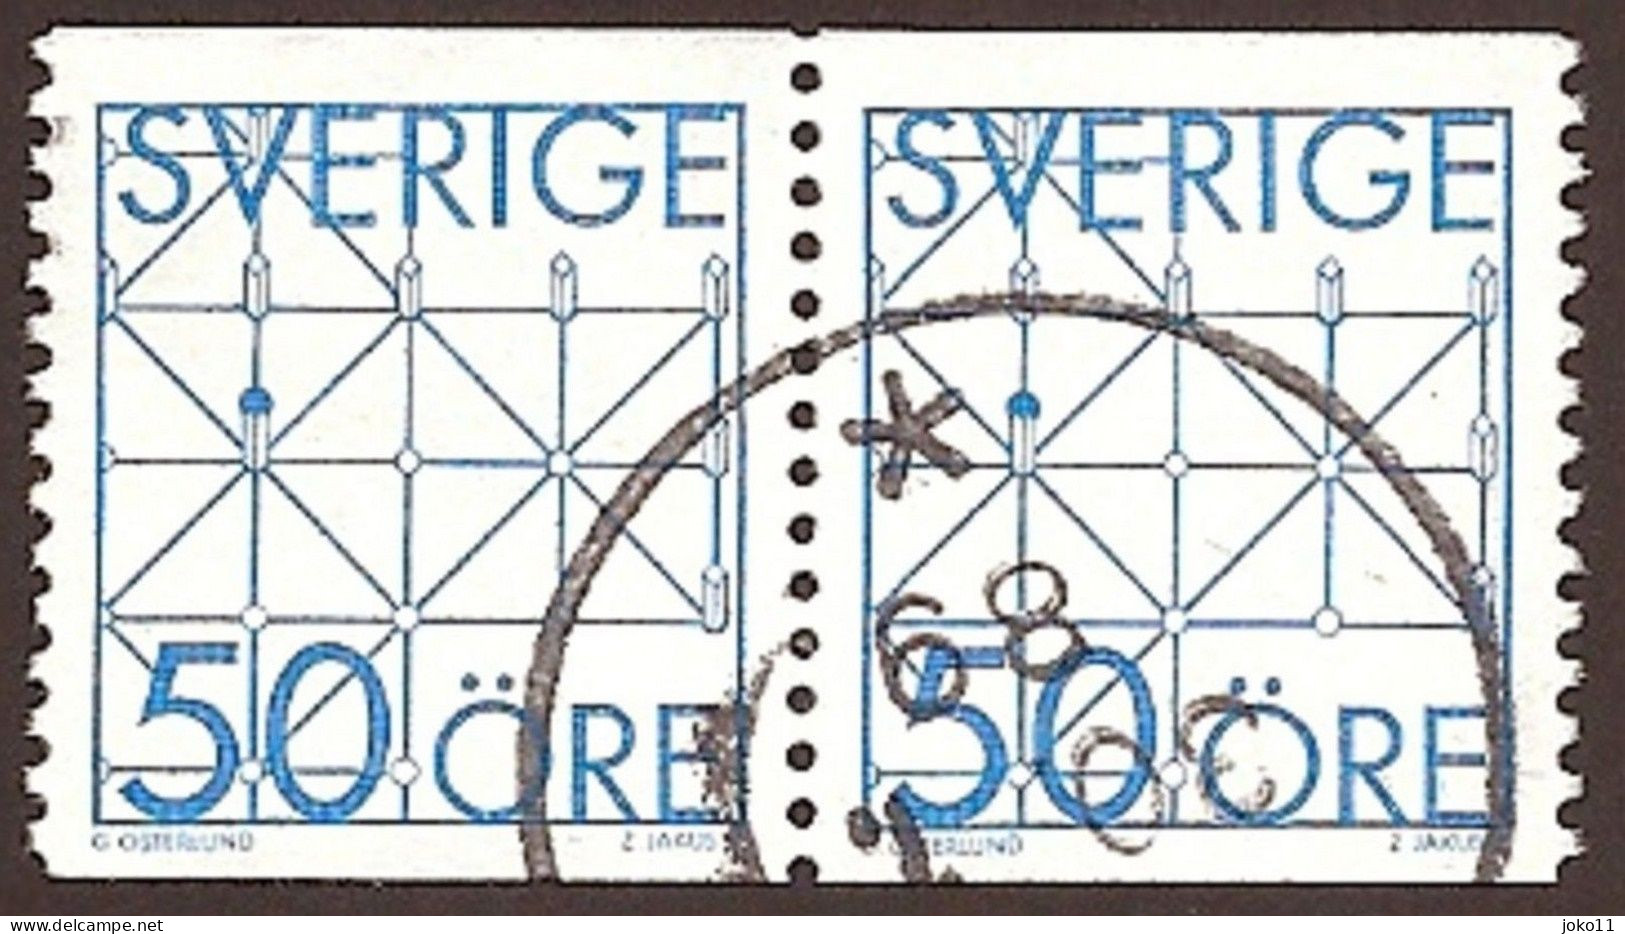 Schweden, 1985, Michel-Nr. 1354, Gestempelt - Used Stamps